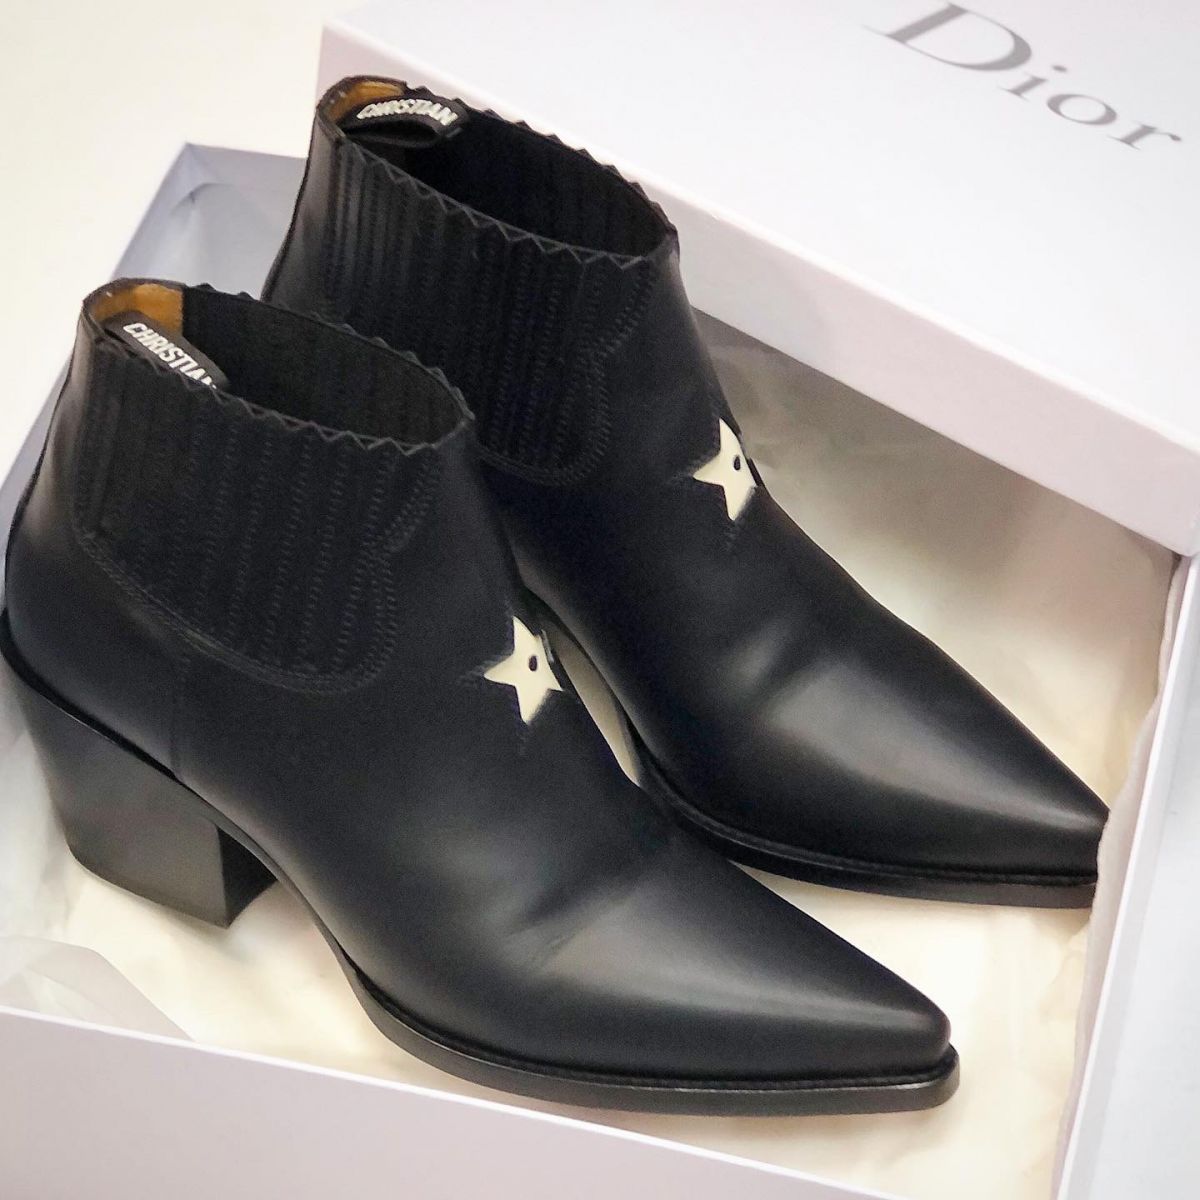 Ботинки Christian Dior  размер 40.5 цена 38 463 руб / упаковка / 